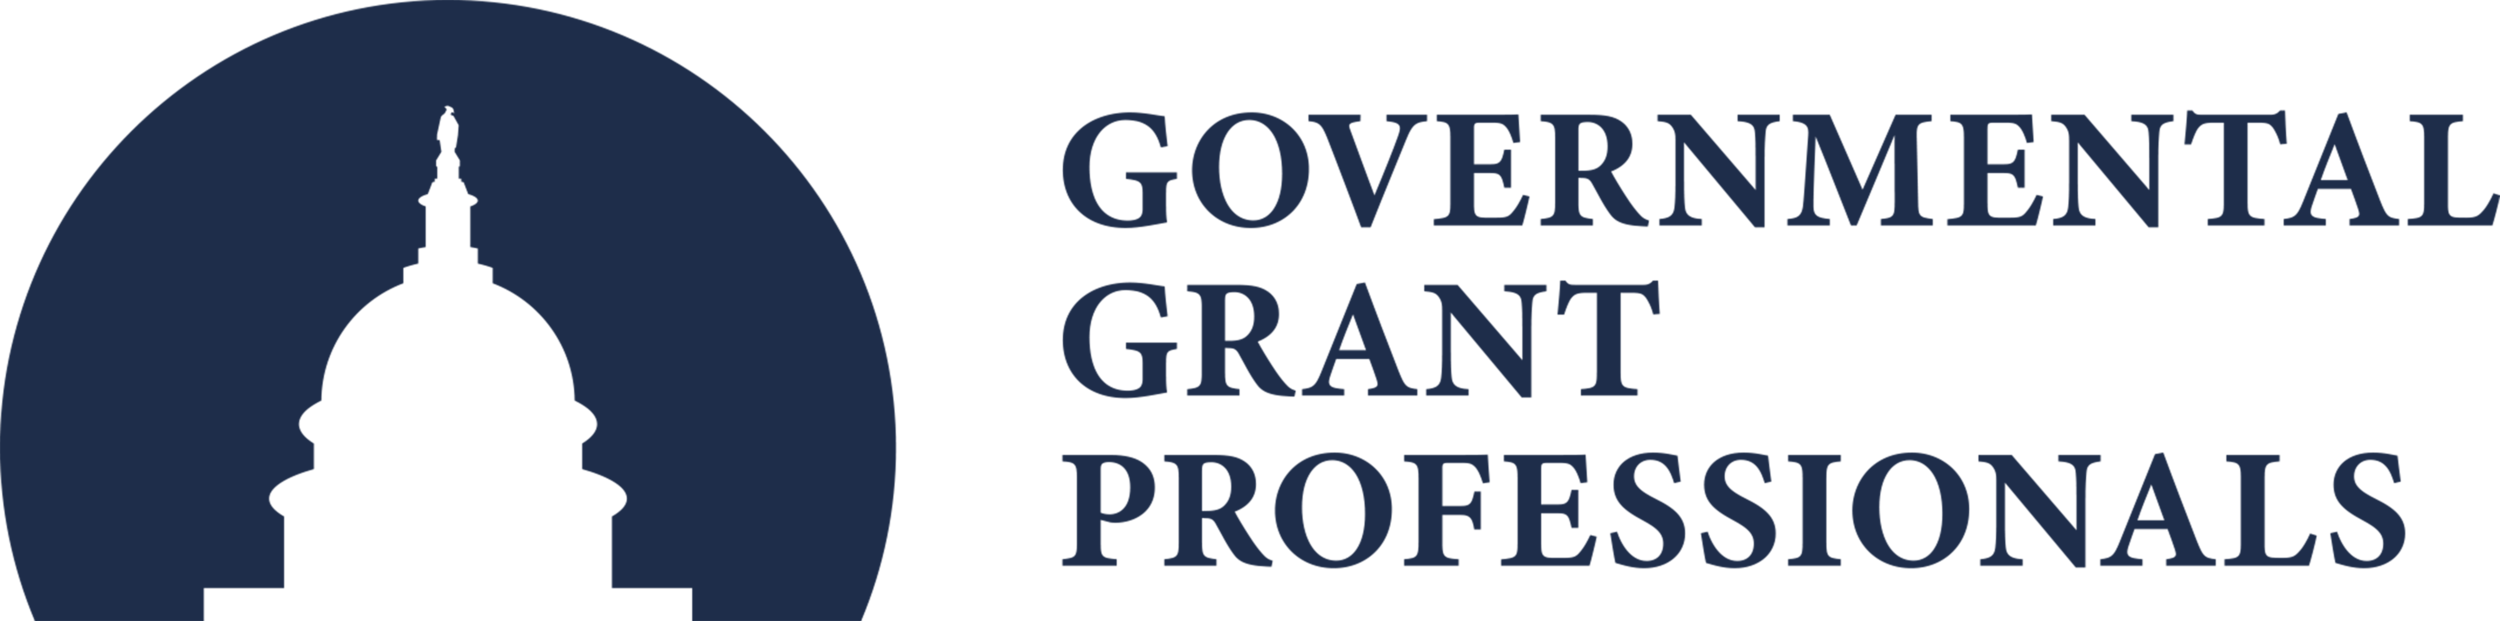 Governmental Grant Professionals